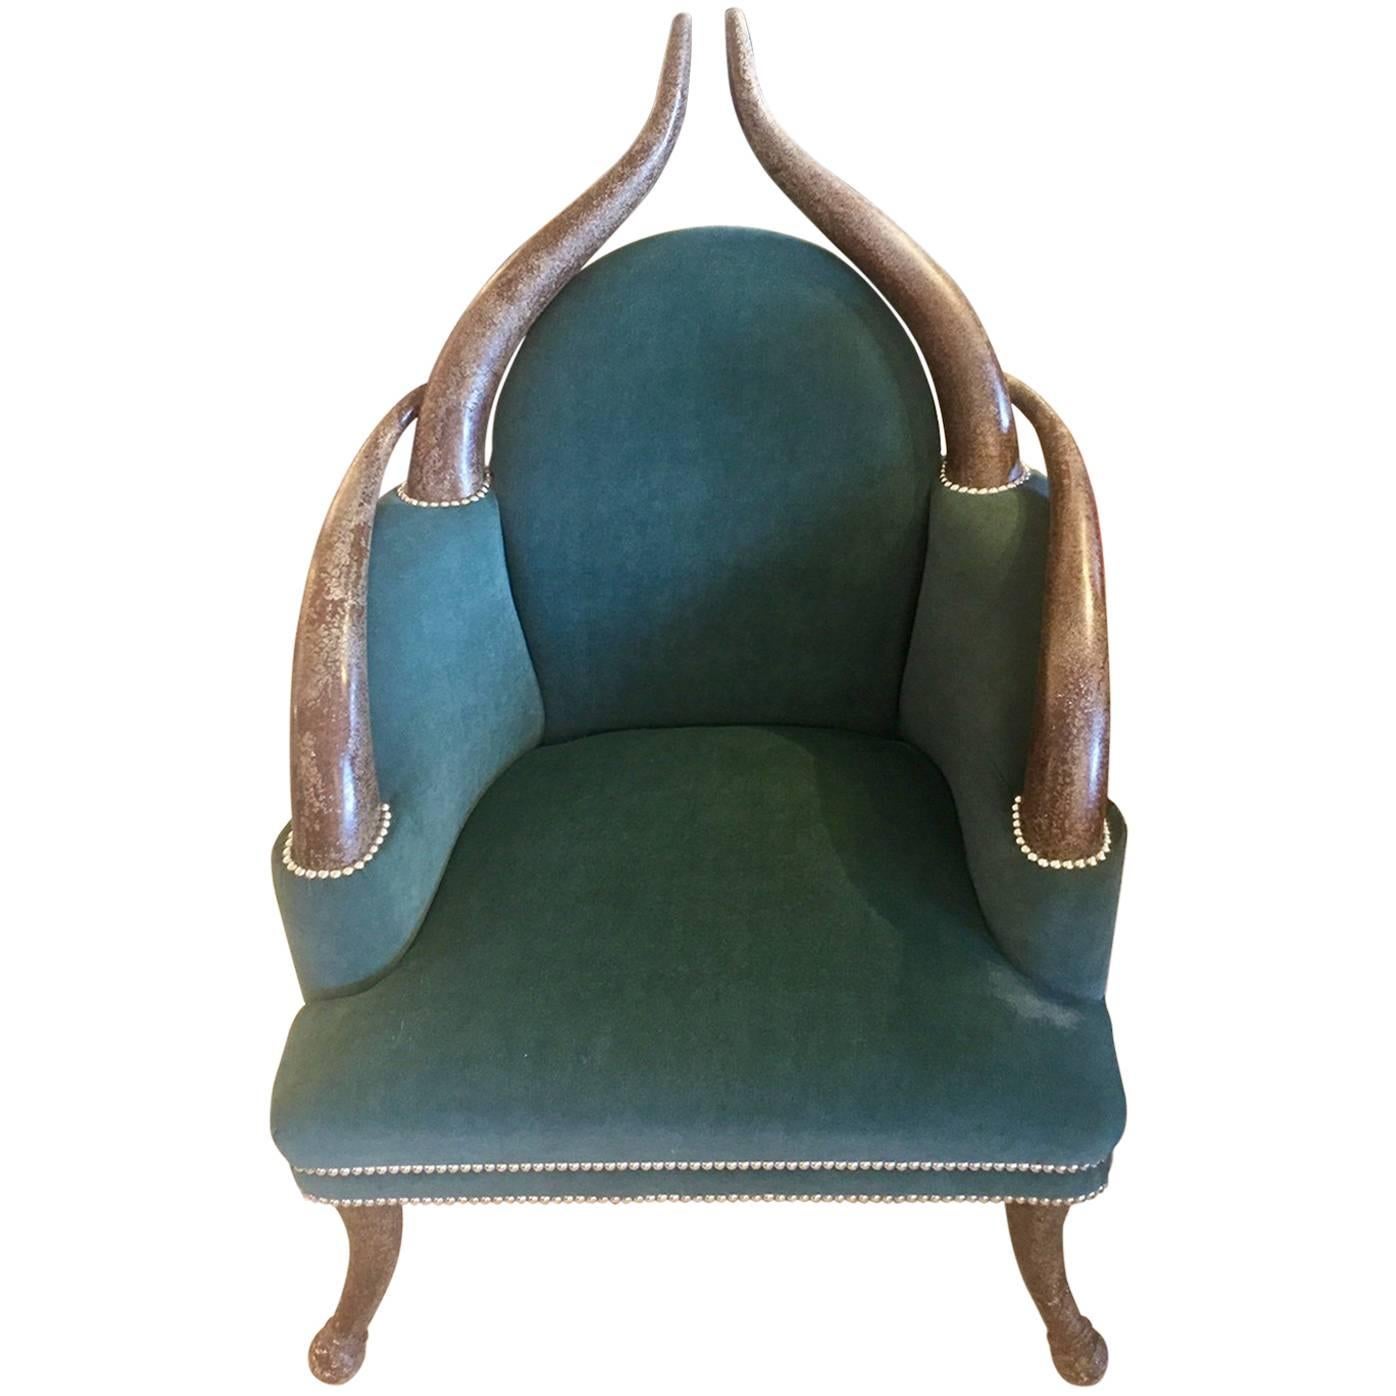 Striking Faux Horn Armchair with Teal Velvet Upholstery